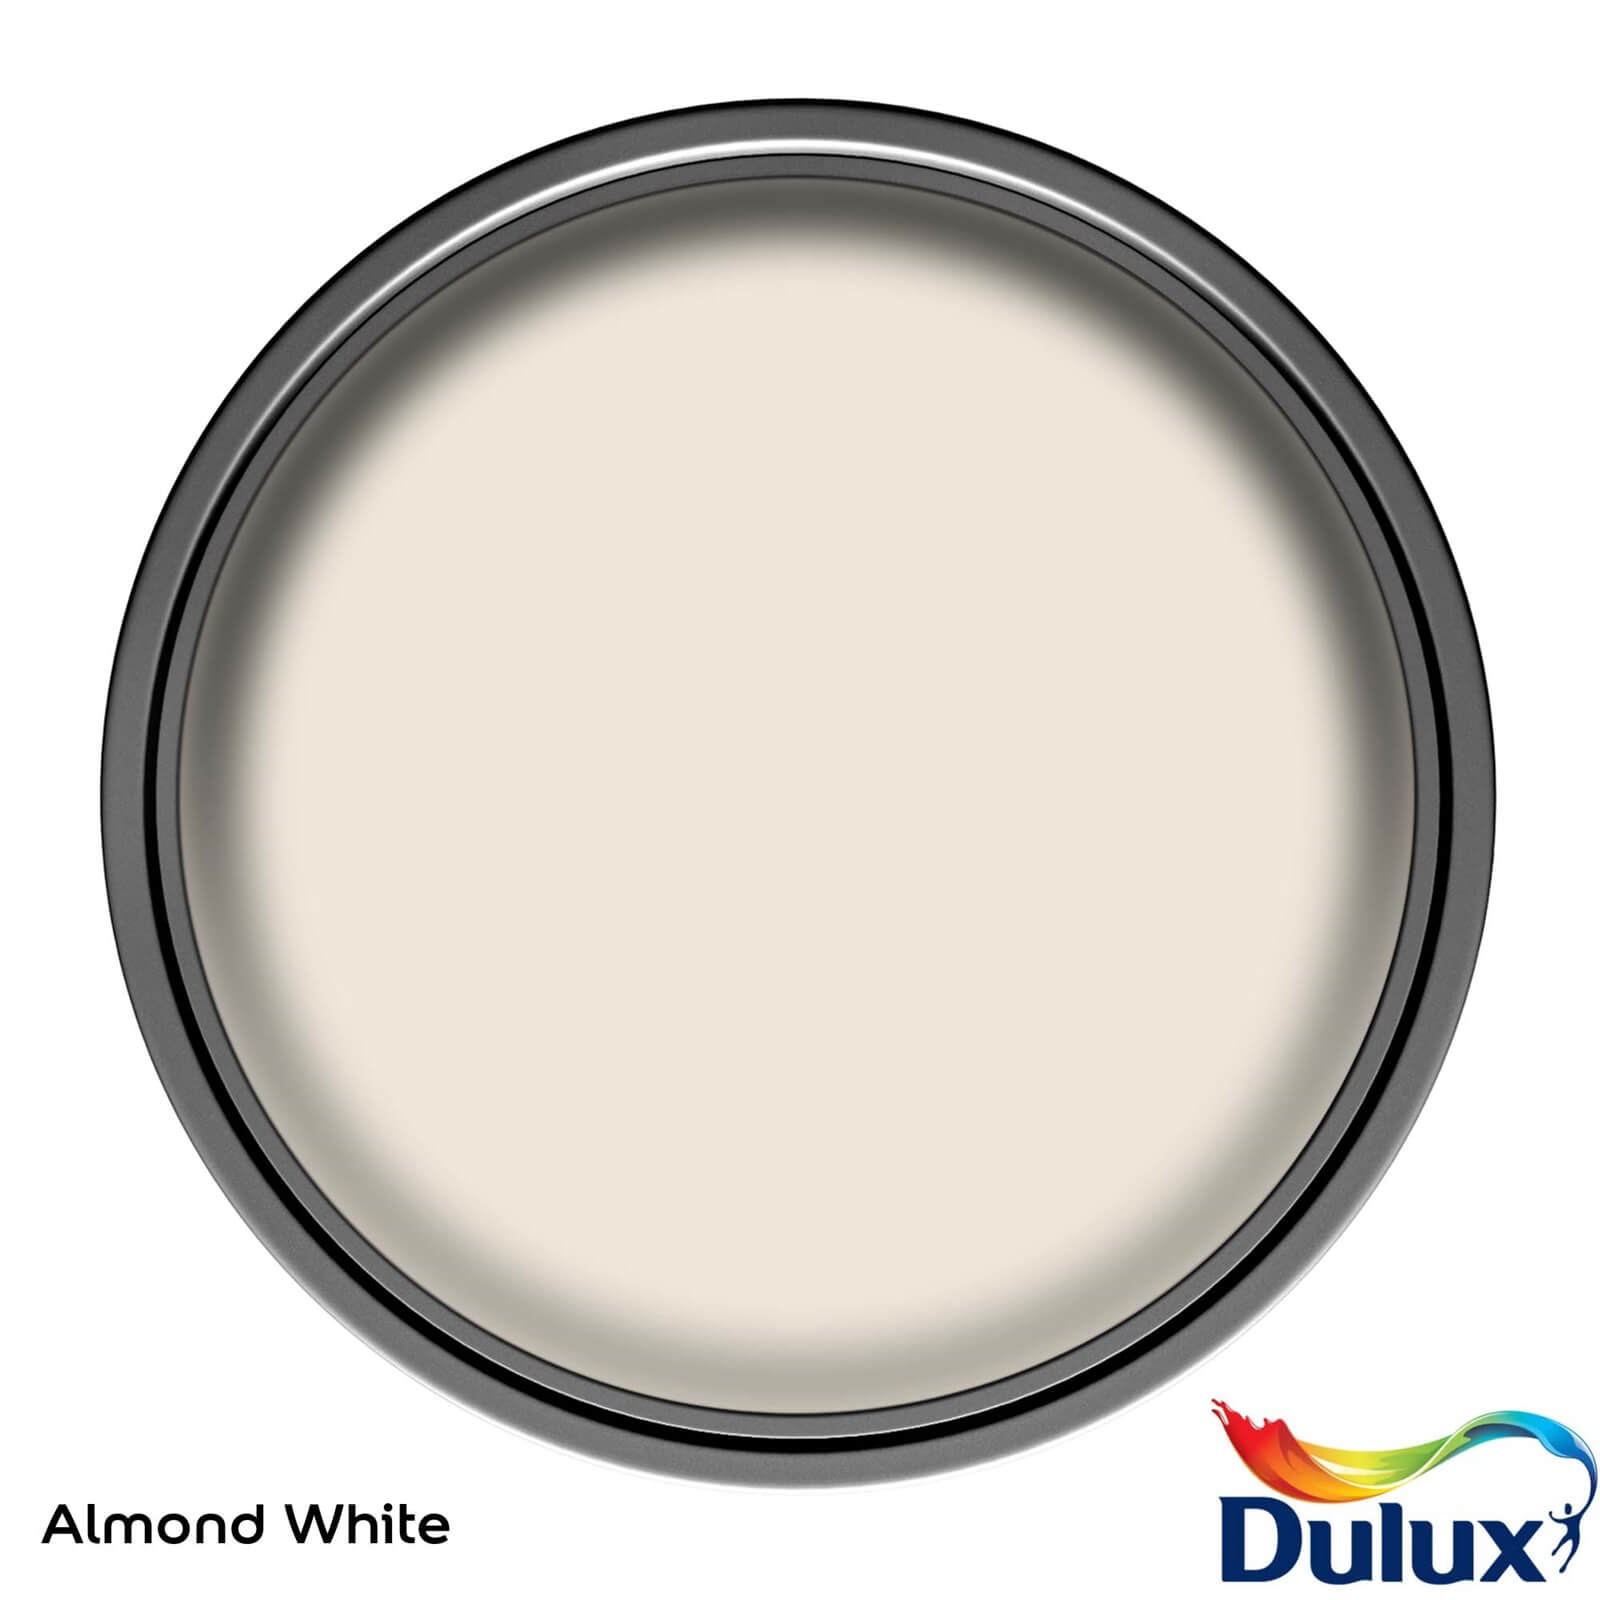 Dulux Matt Emulsion Paint Almond White - 5L